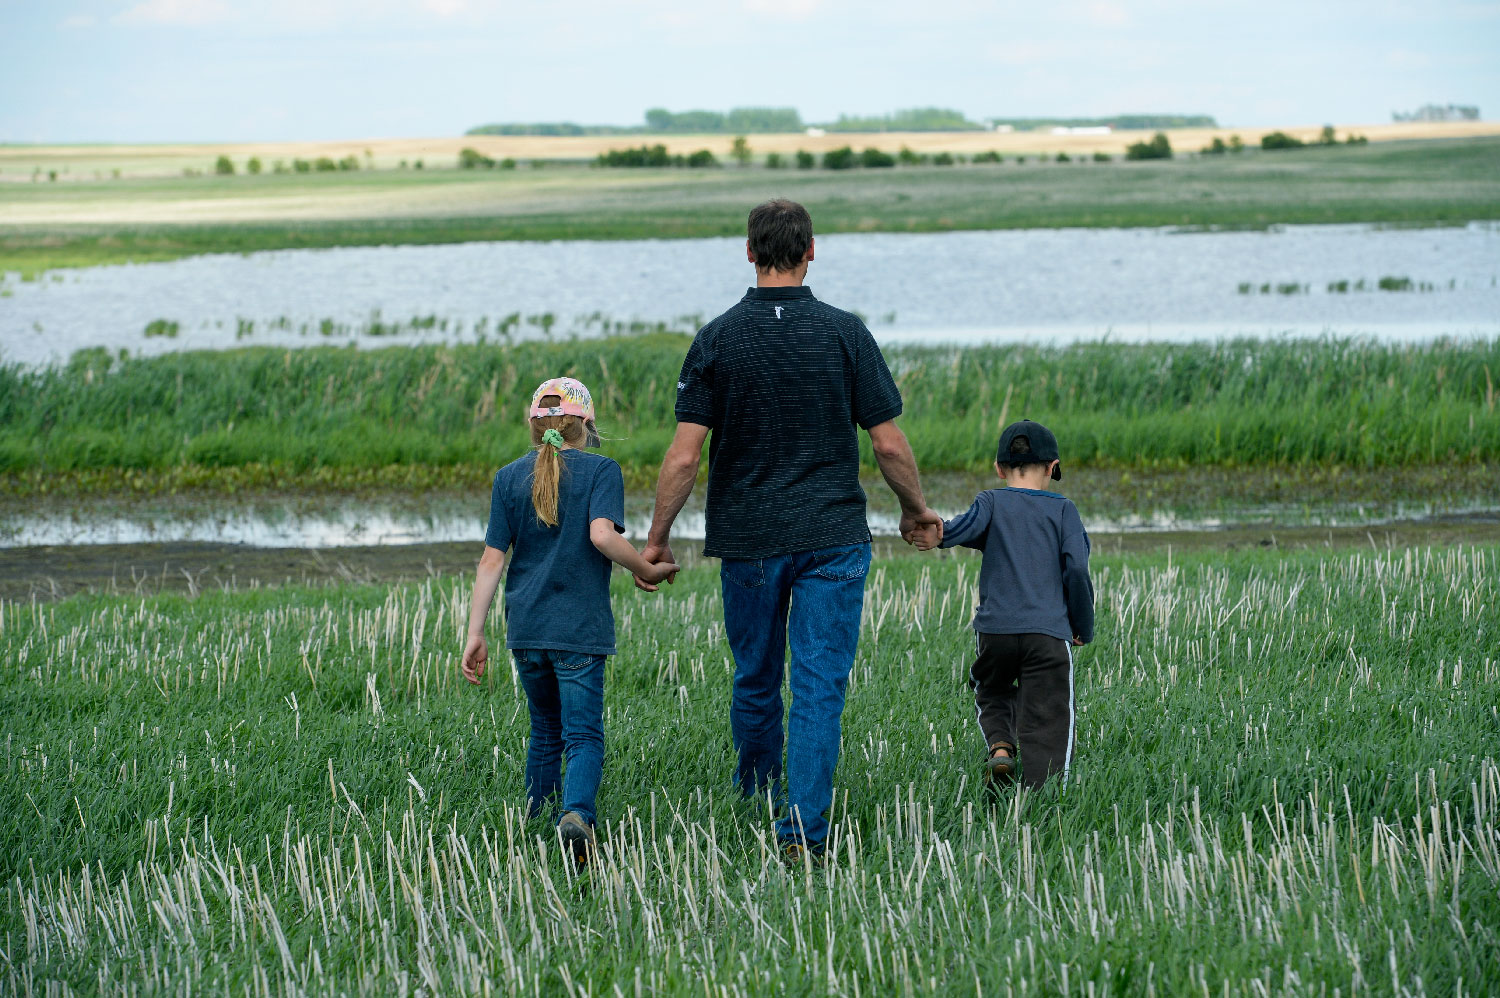 A man and a little boy and girl walk holding hands through a field.